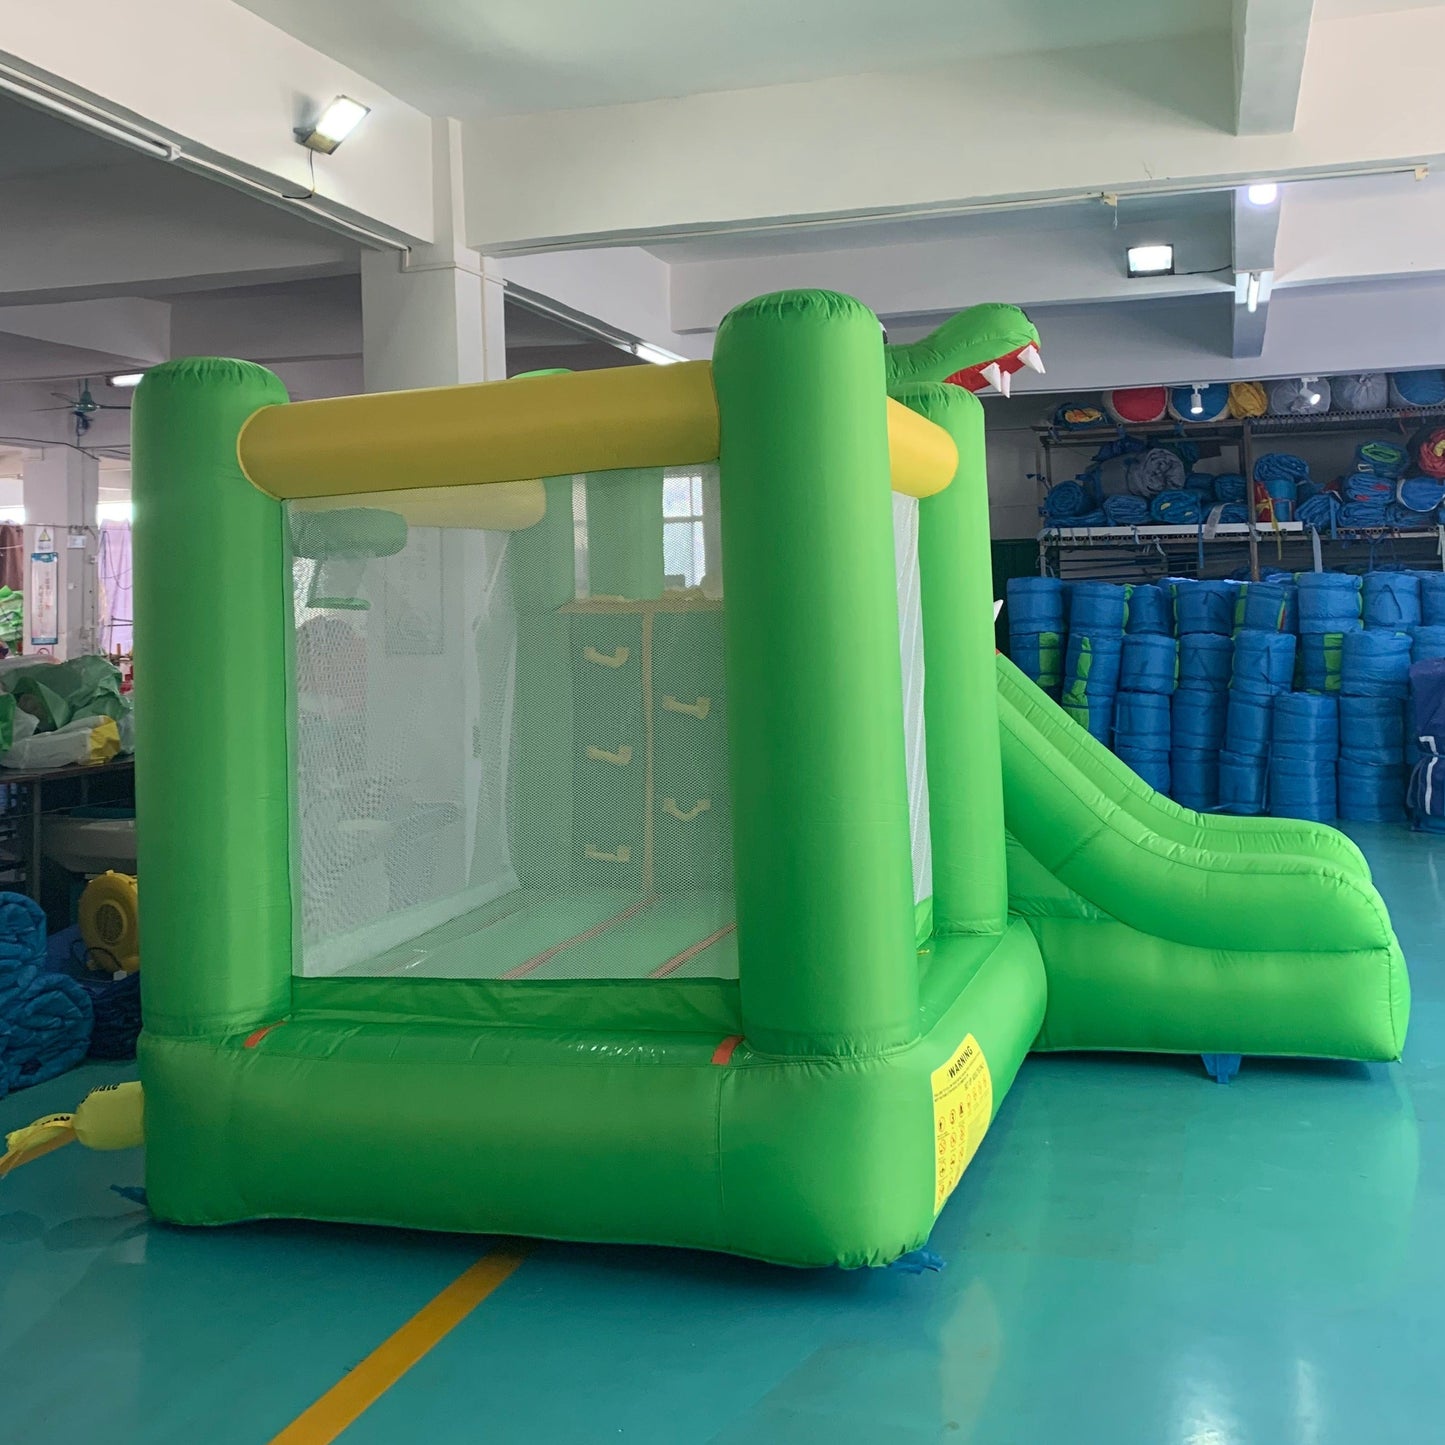 YARD Green Dinosaur Bounce House Inflatable Slide